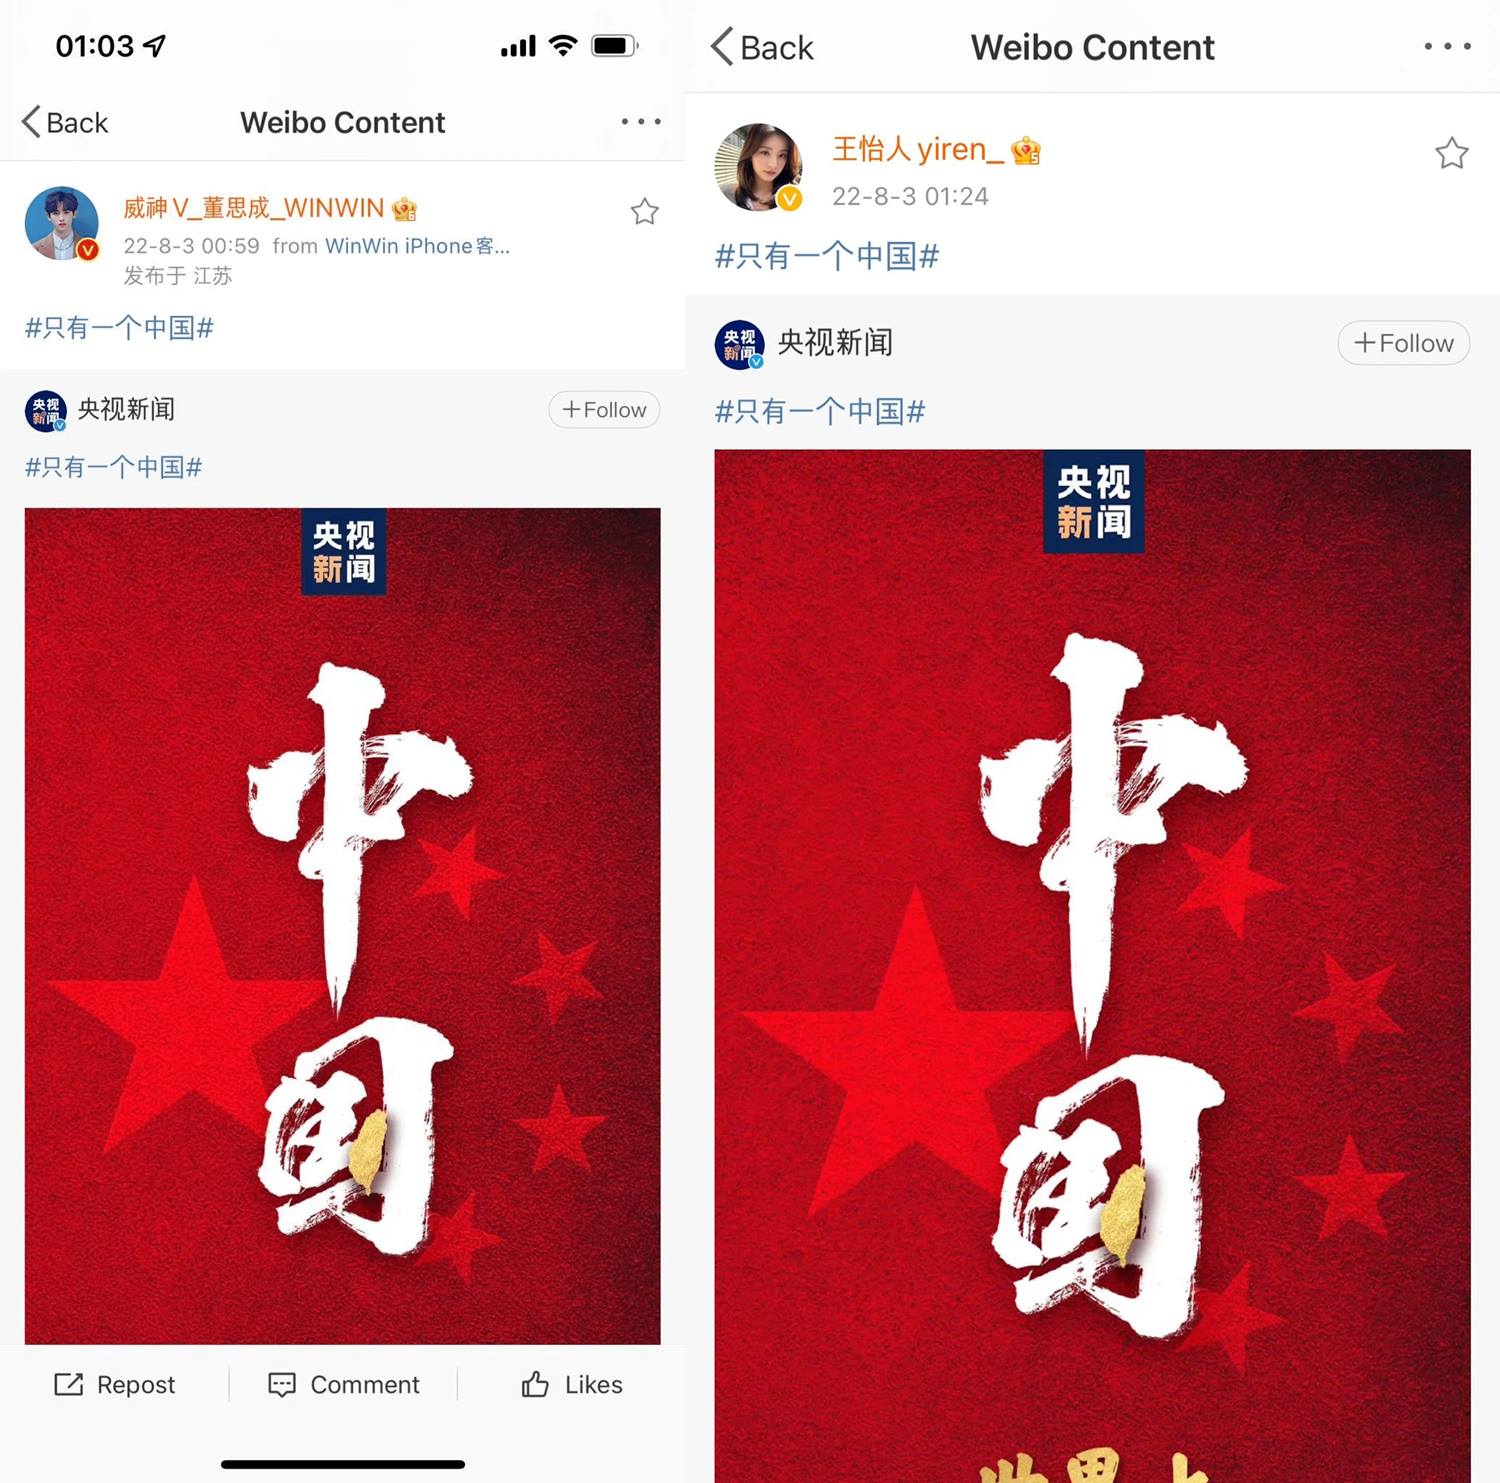 Unggahan Weibo pribadi Winwin NCT dan Yiren EVERGLOW